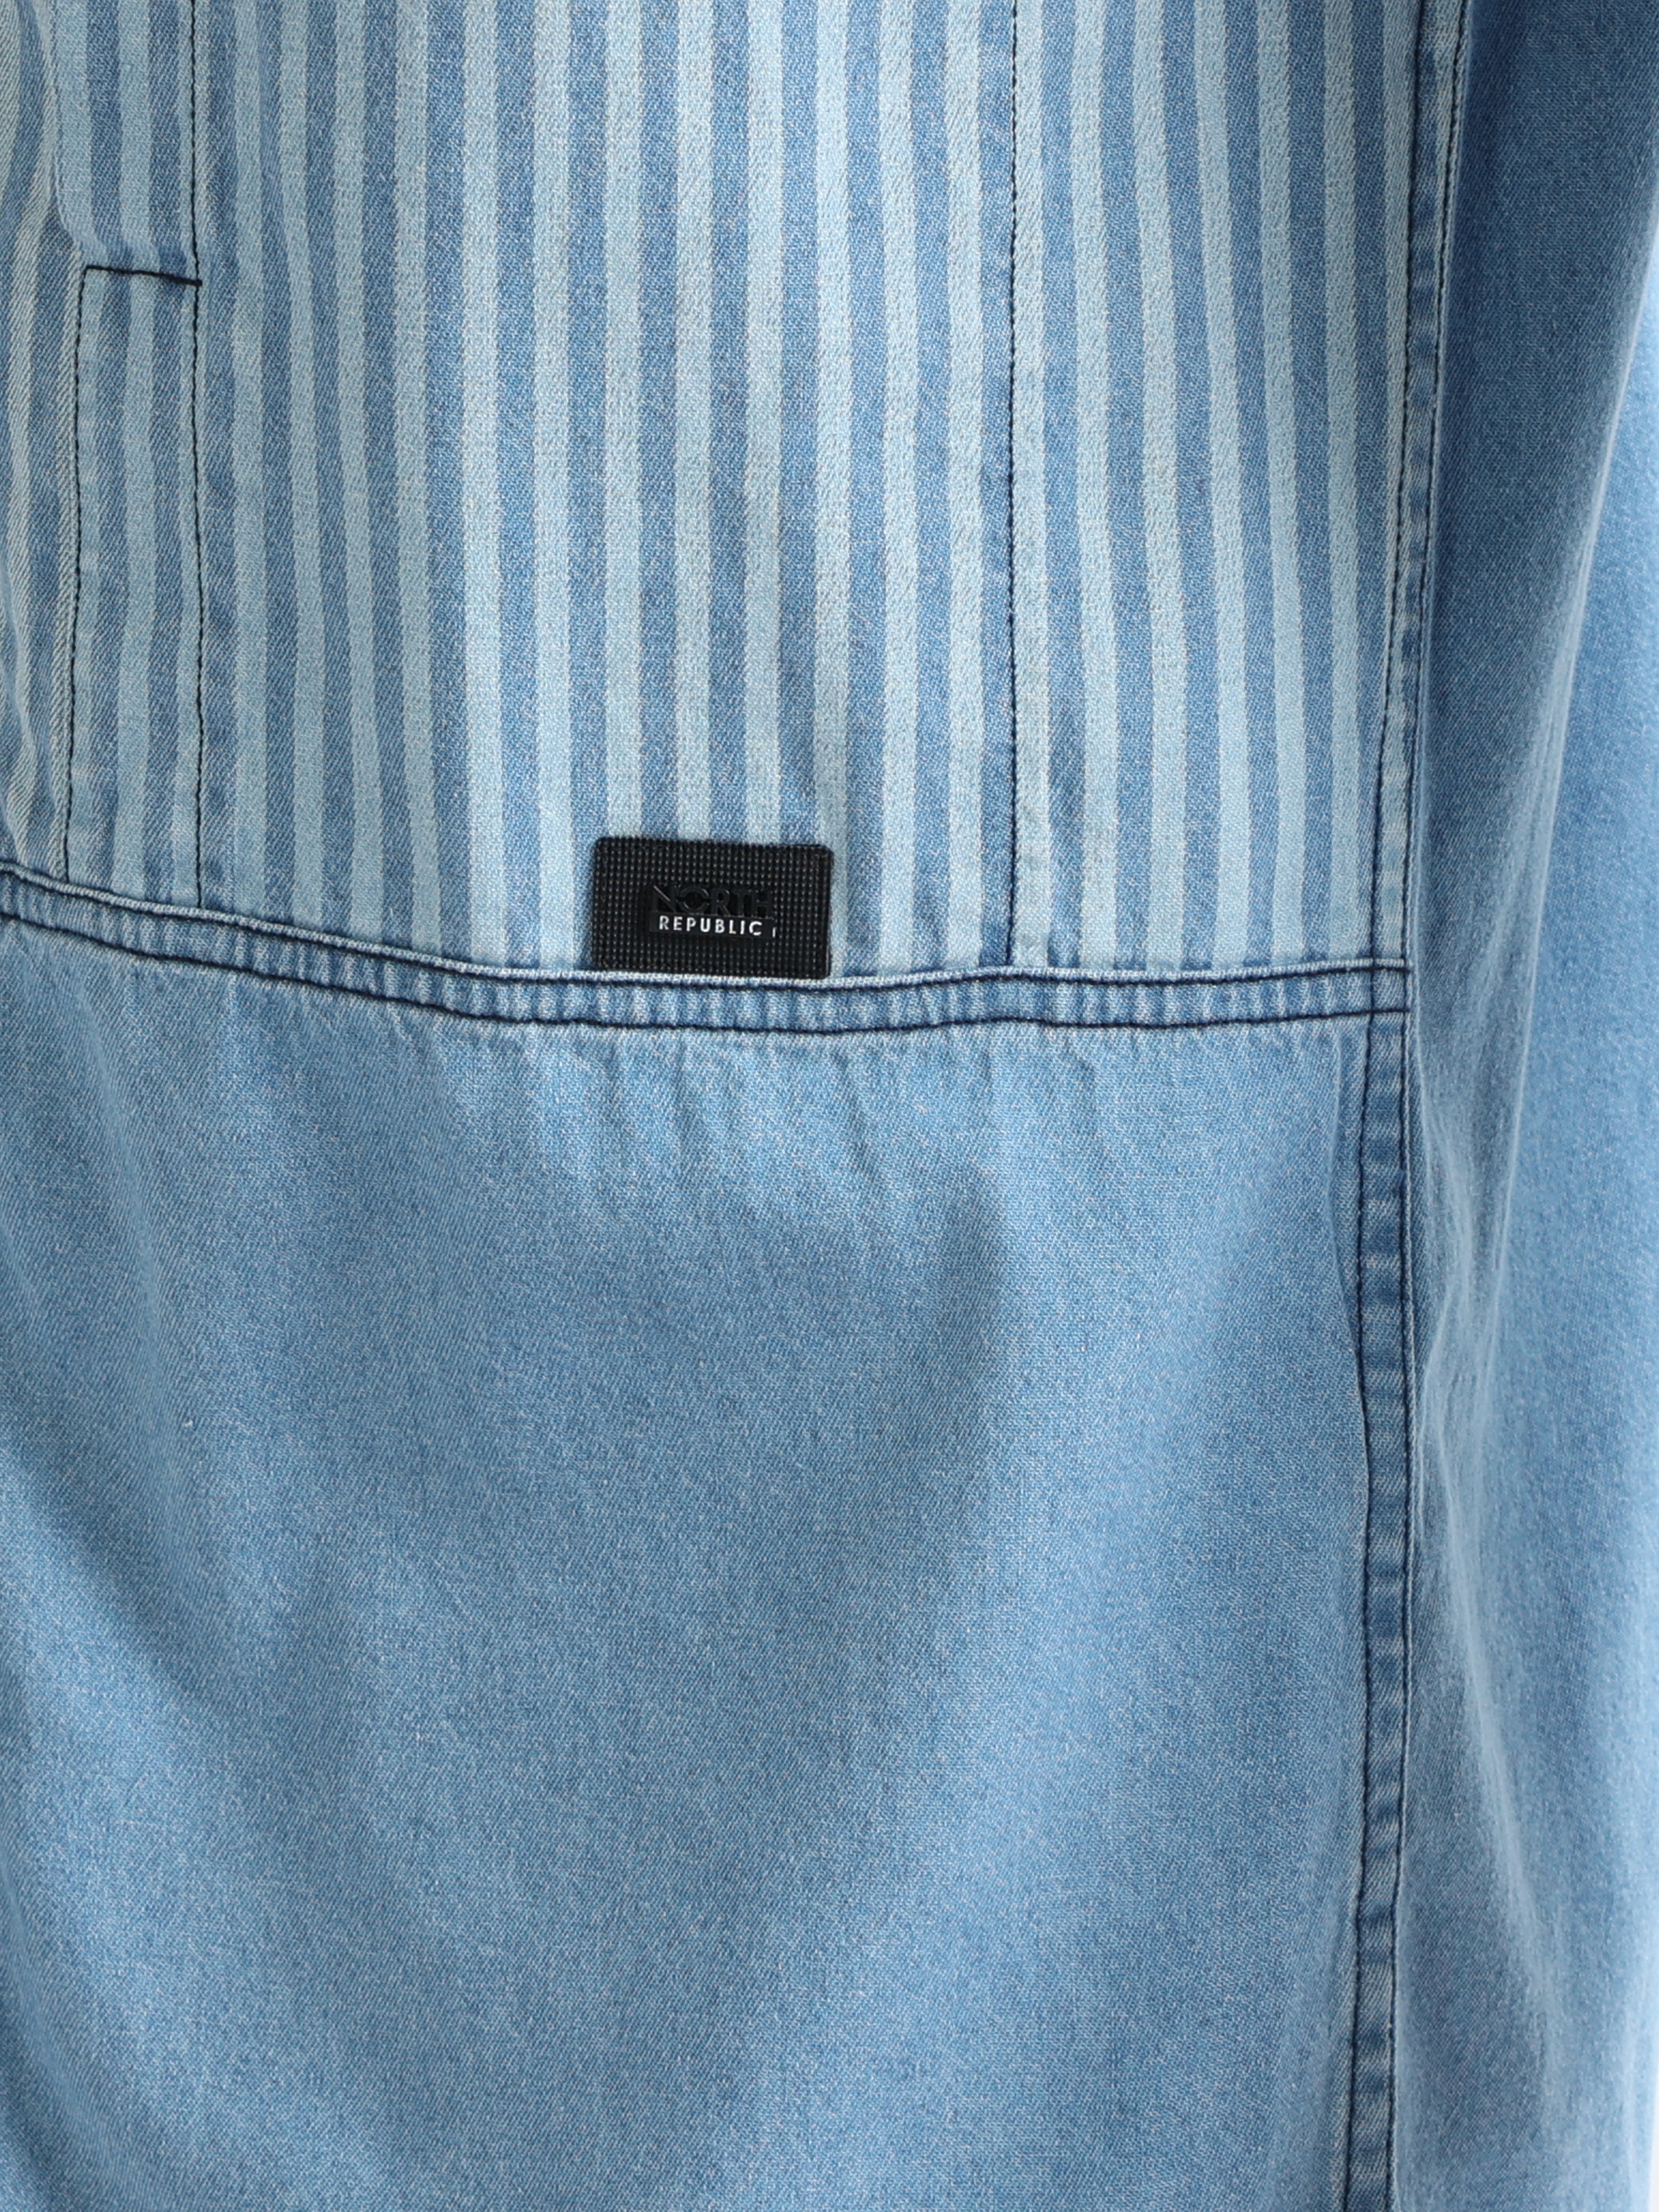 XIULAIQ Cotton Washed Man Denim Shirt Spring Long Sleeve Male Vintage  Pockets Hip Hop Men Jean Casual Cowboy Shirts (Color : A, Size : XXXL code)  : Amazon.co.uk: Fashion